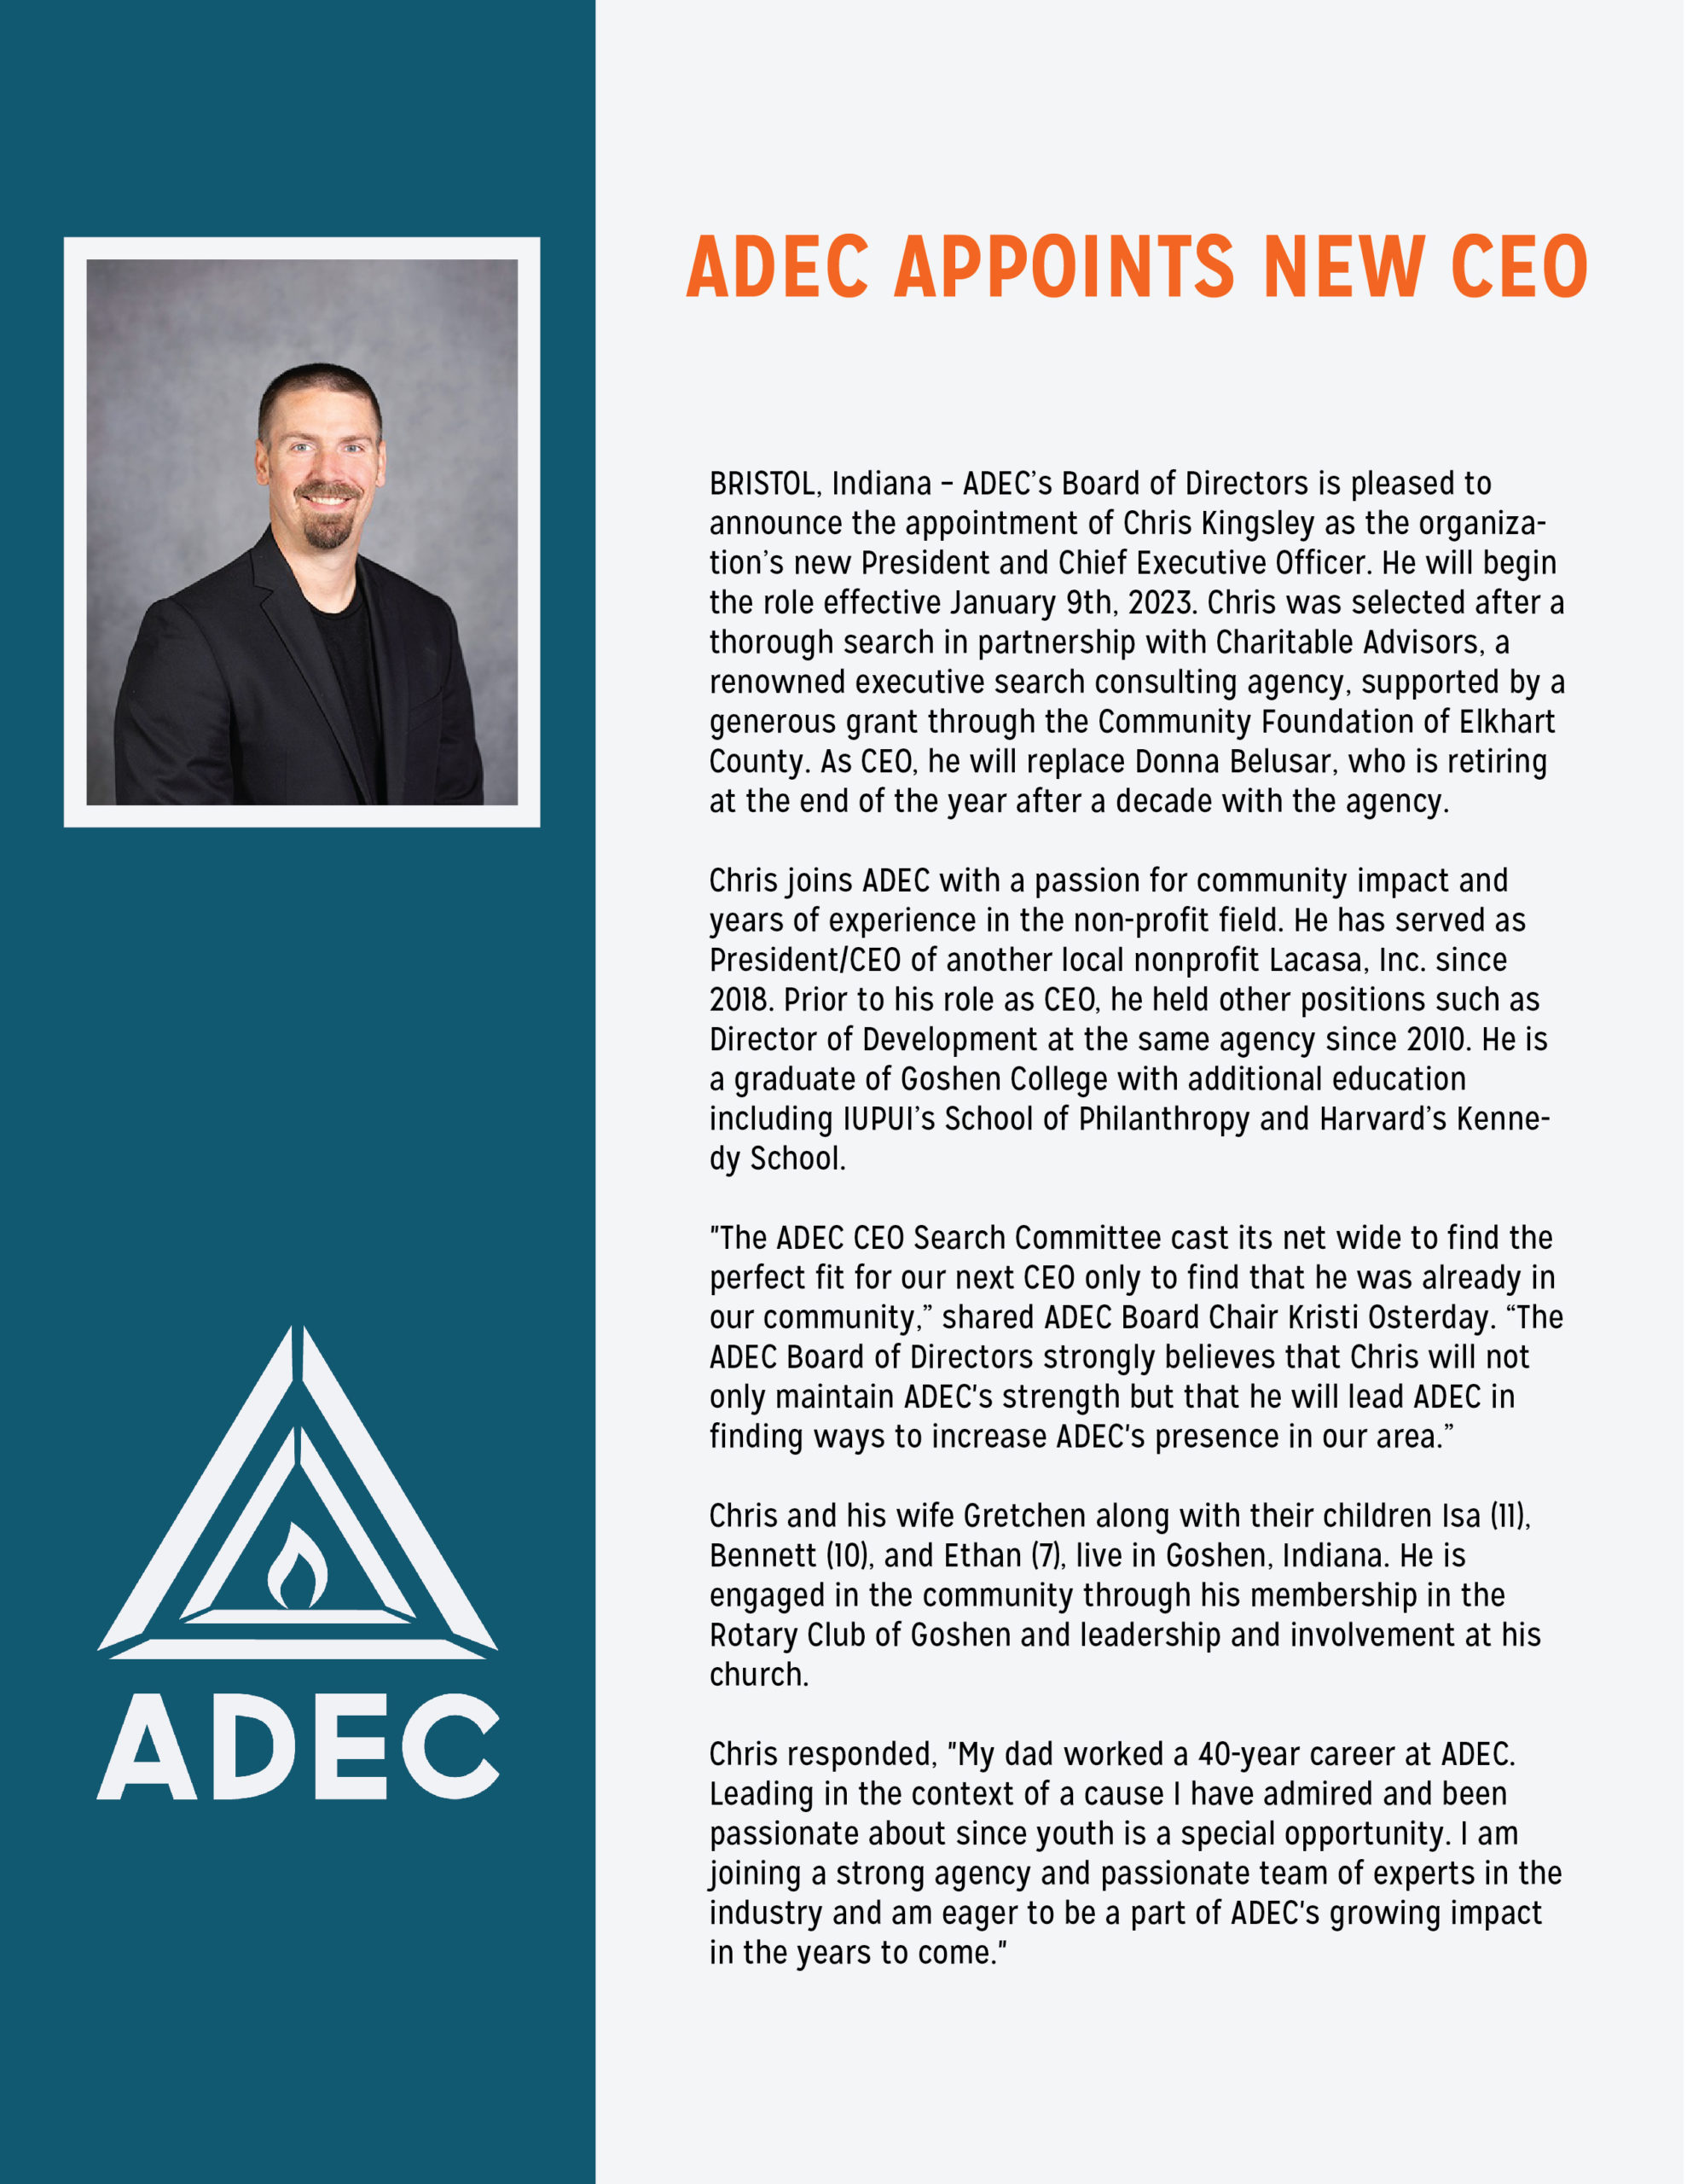 New ADEC CEO Chris Kingsley